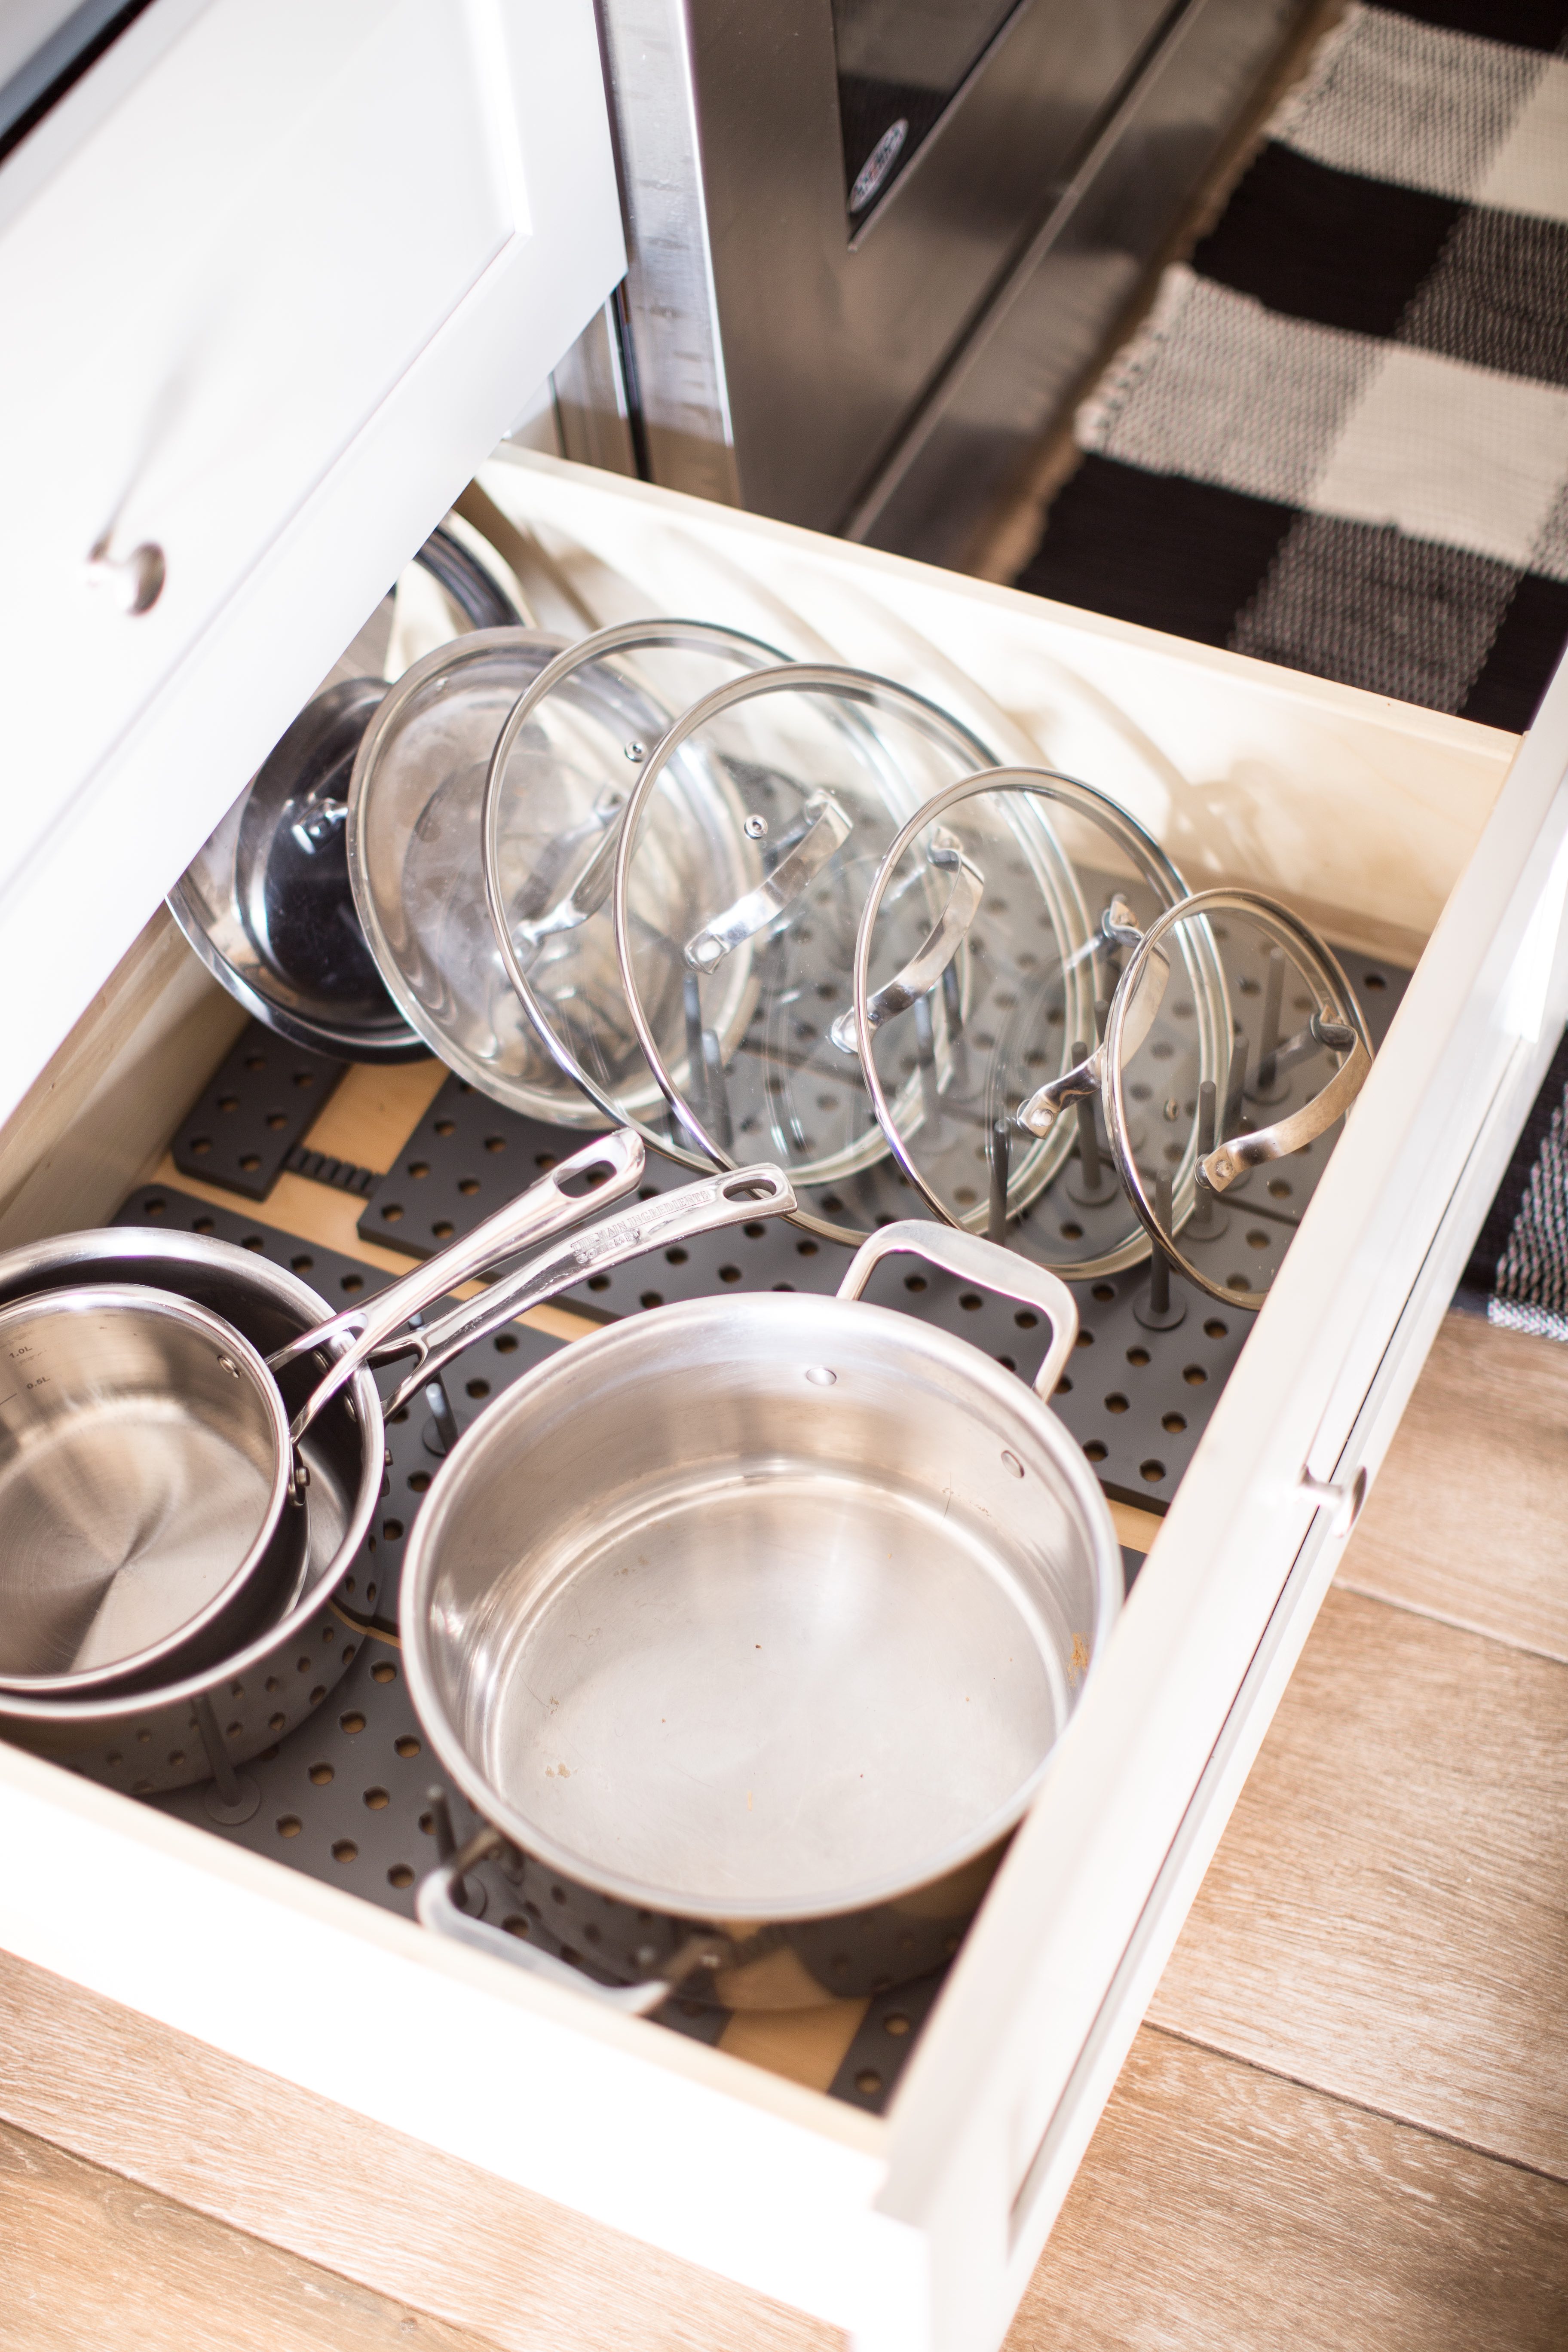 How to store pot lids: 10 best ways to organize pan lids